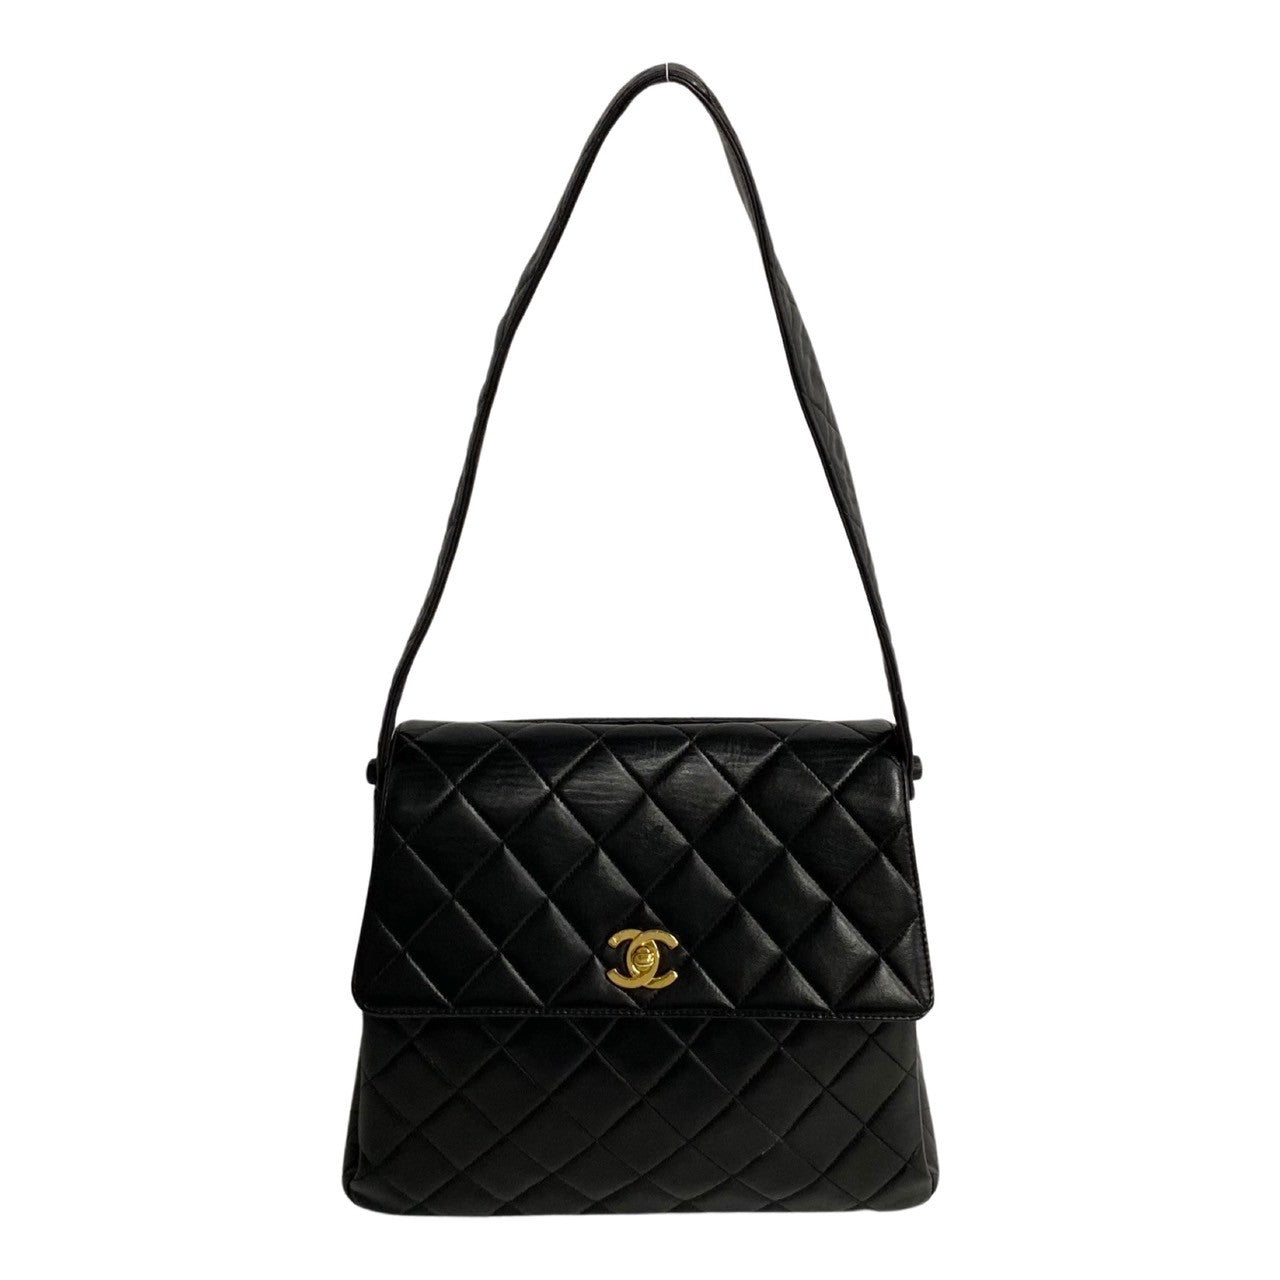 Chanel Quilted CC Flap Shoulder Bag Leather Shoulder Bag in Good condition